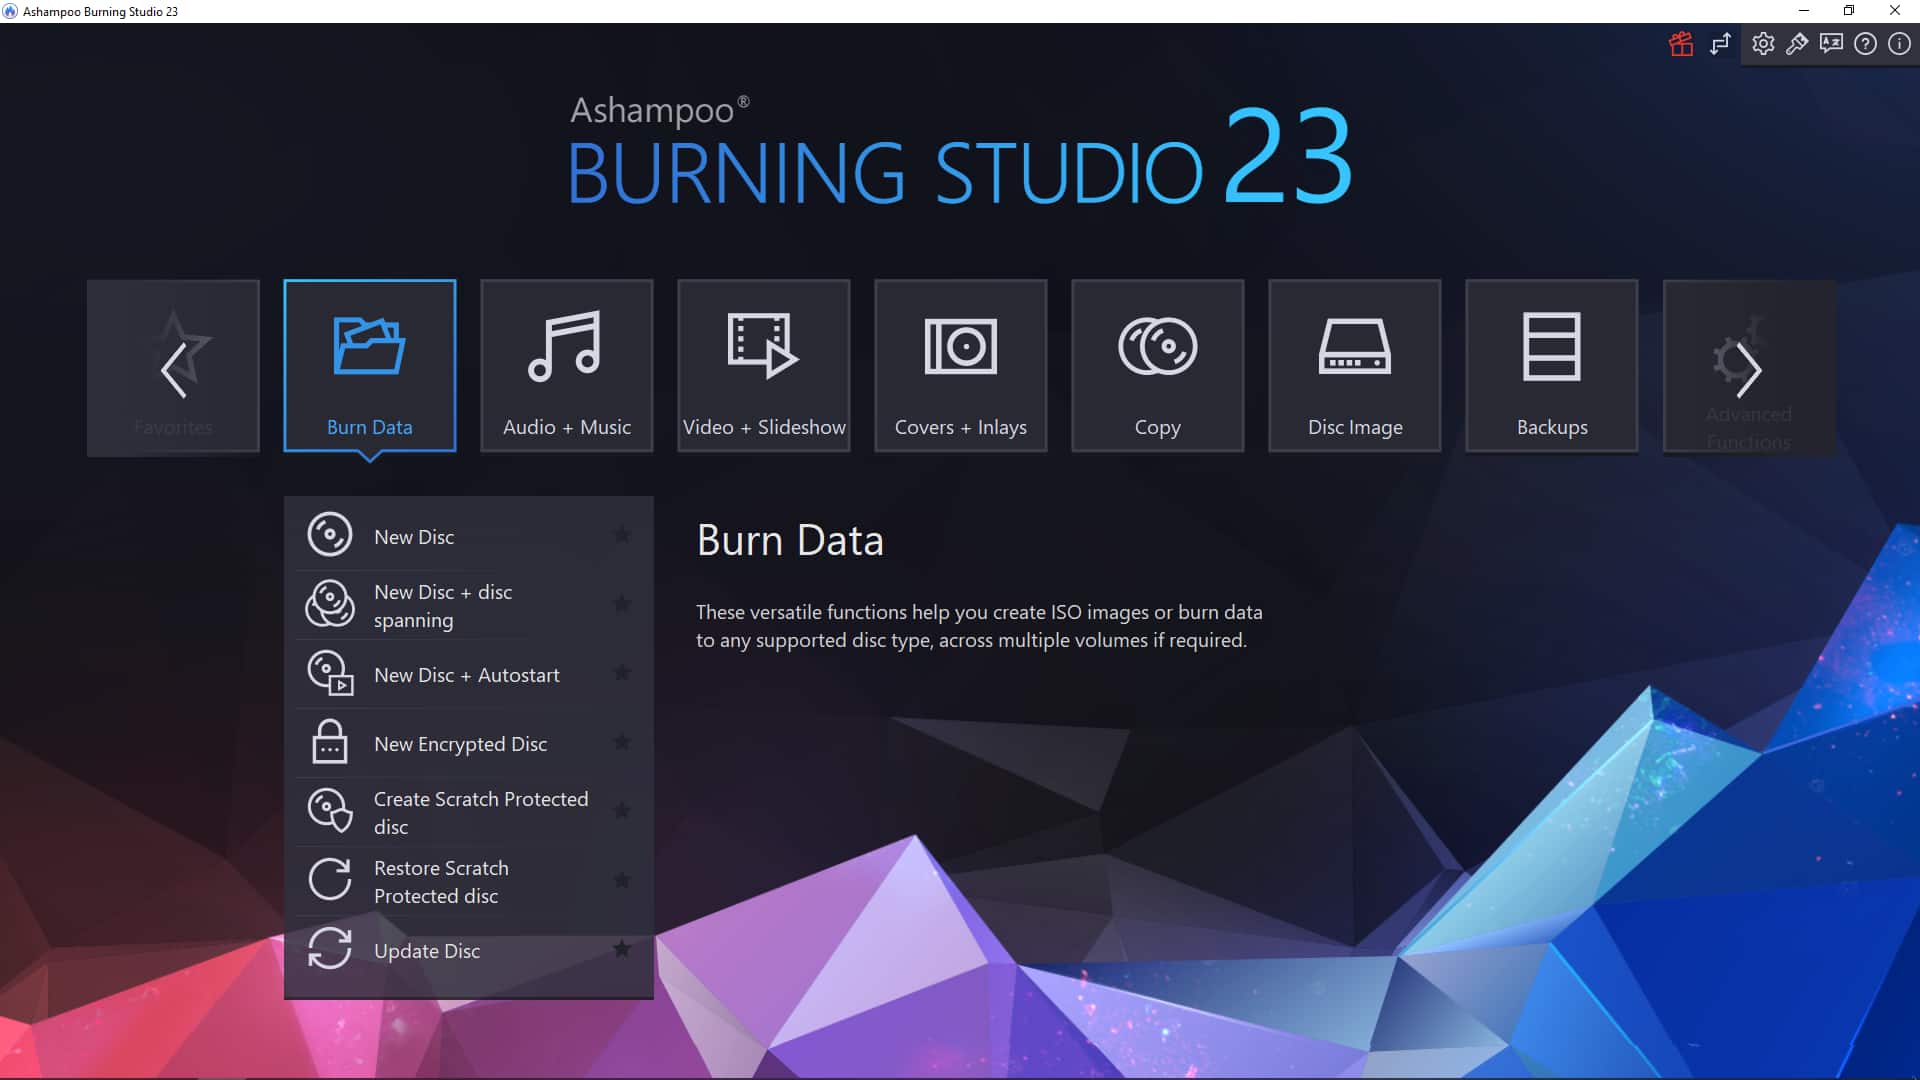 Ashampoo Burning Studio 23 interface